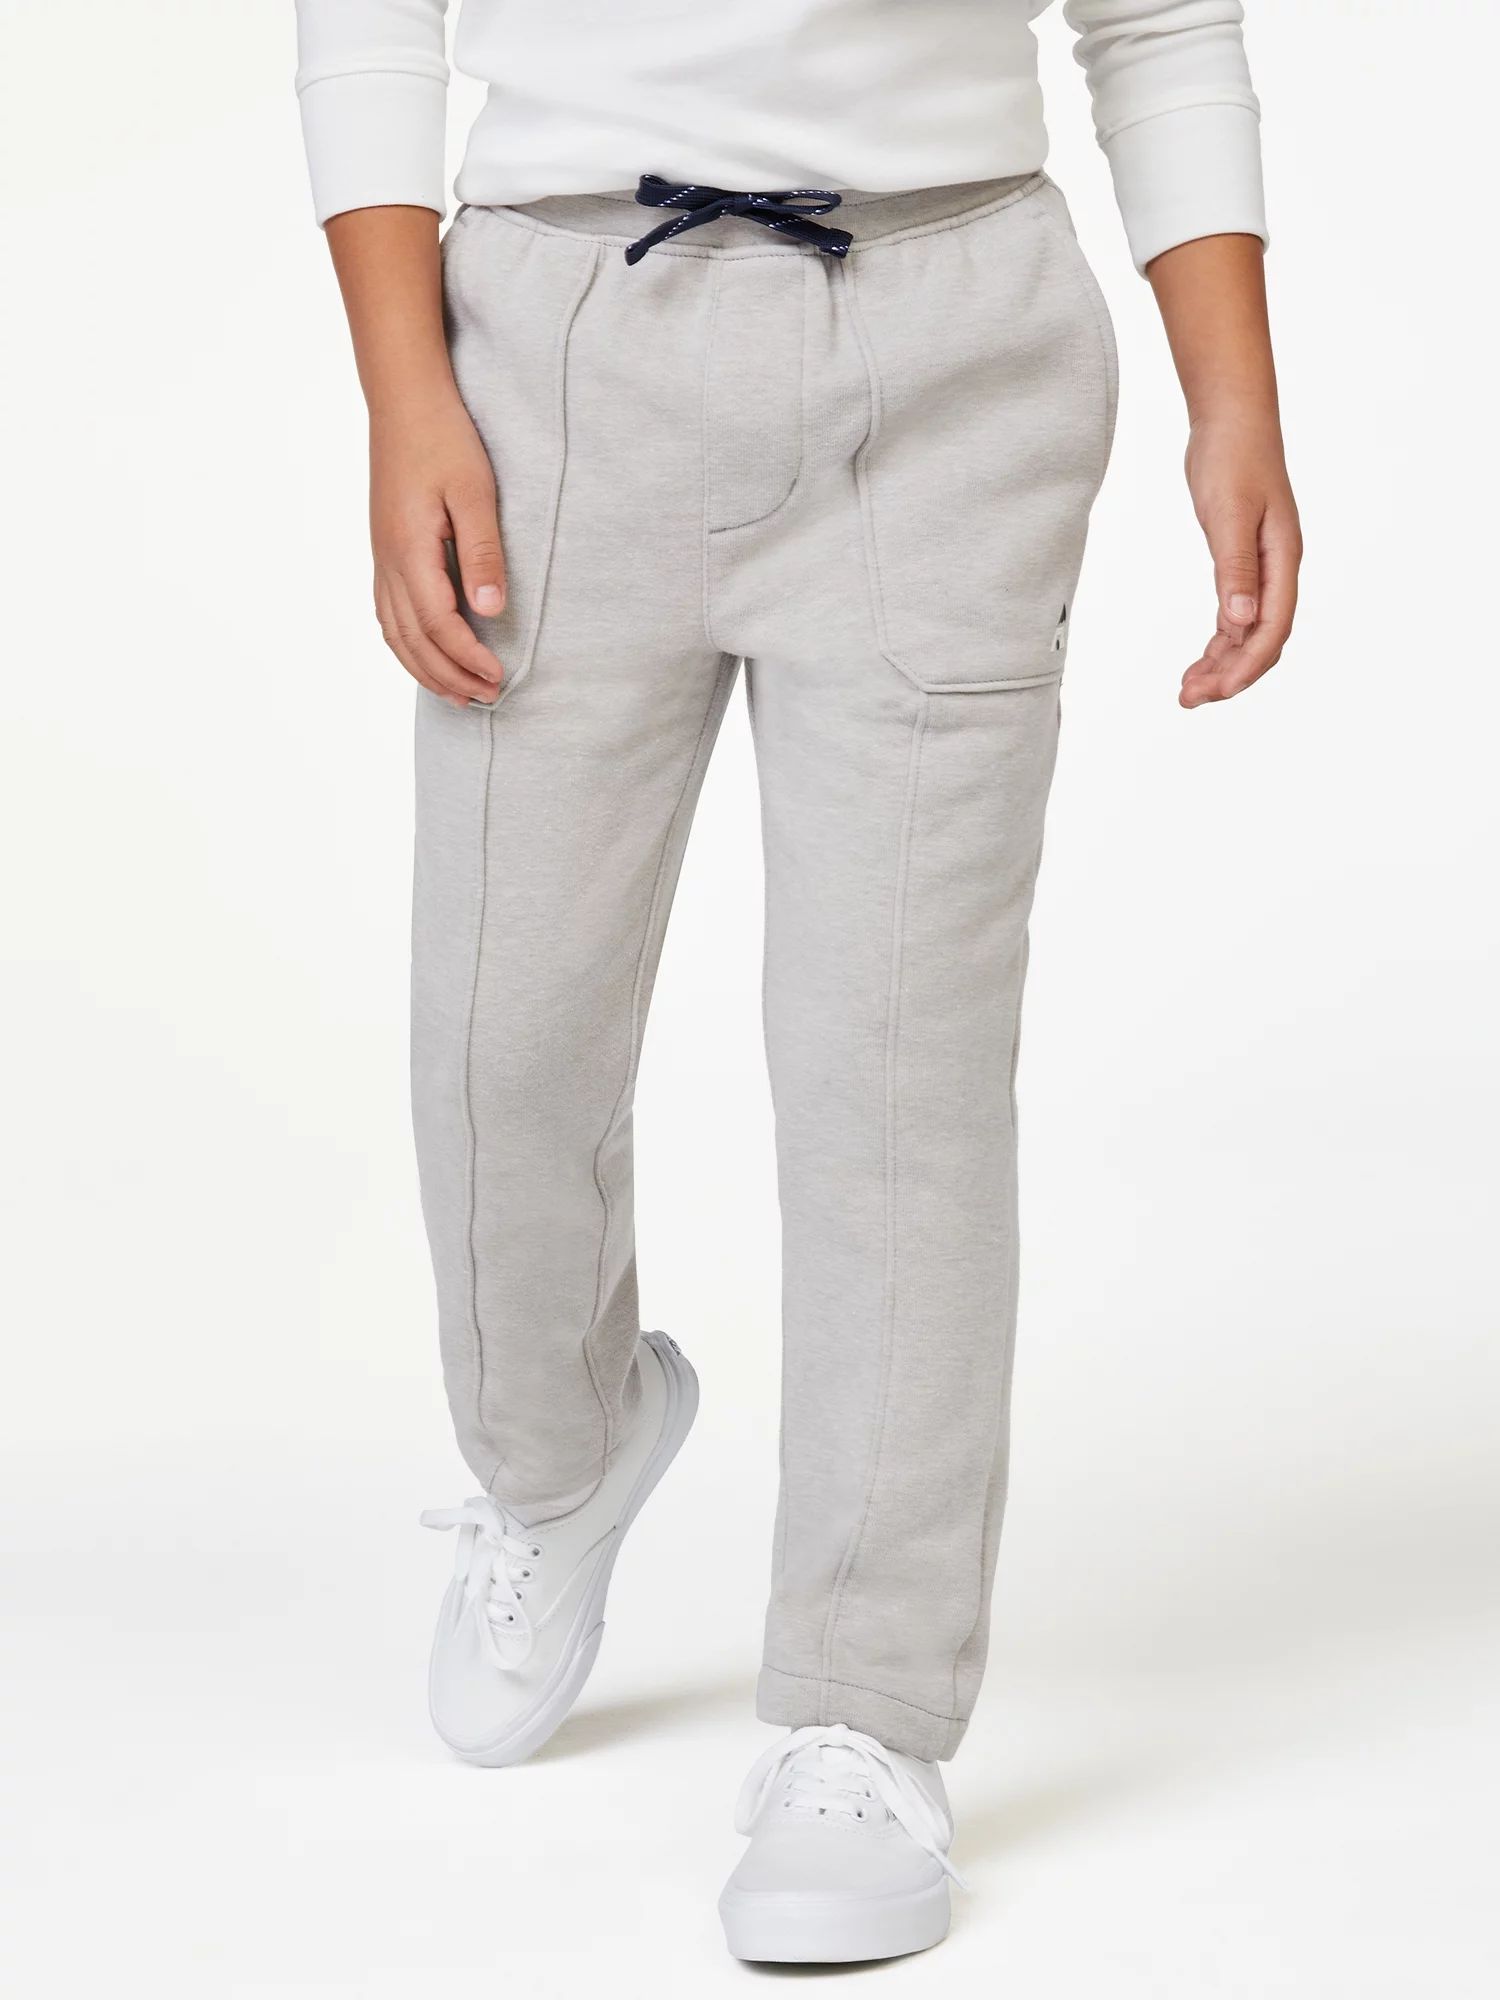 Free Assembly Boys Fleece Fatigue Pants, Sizes 4-18 | Walmart (US)